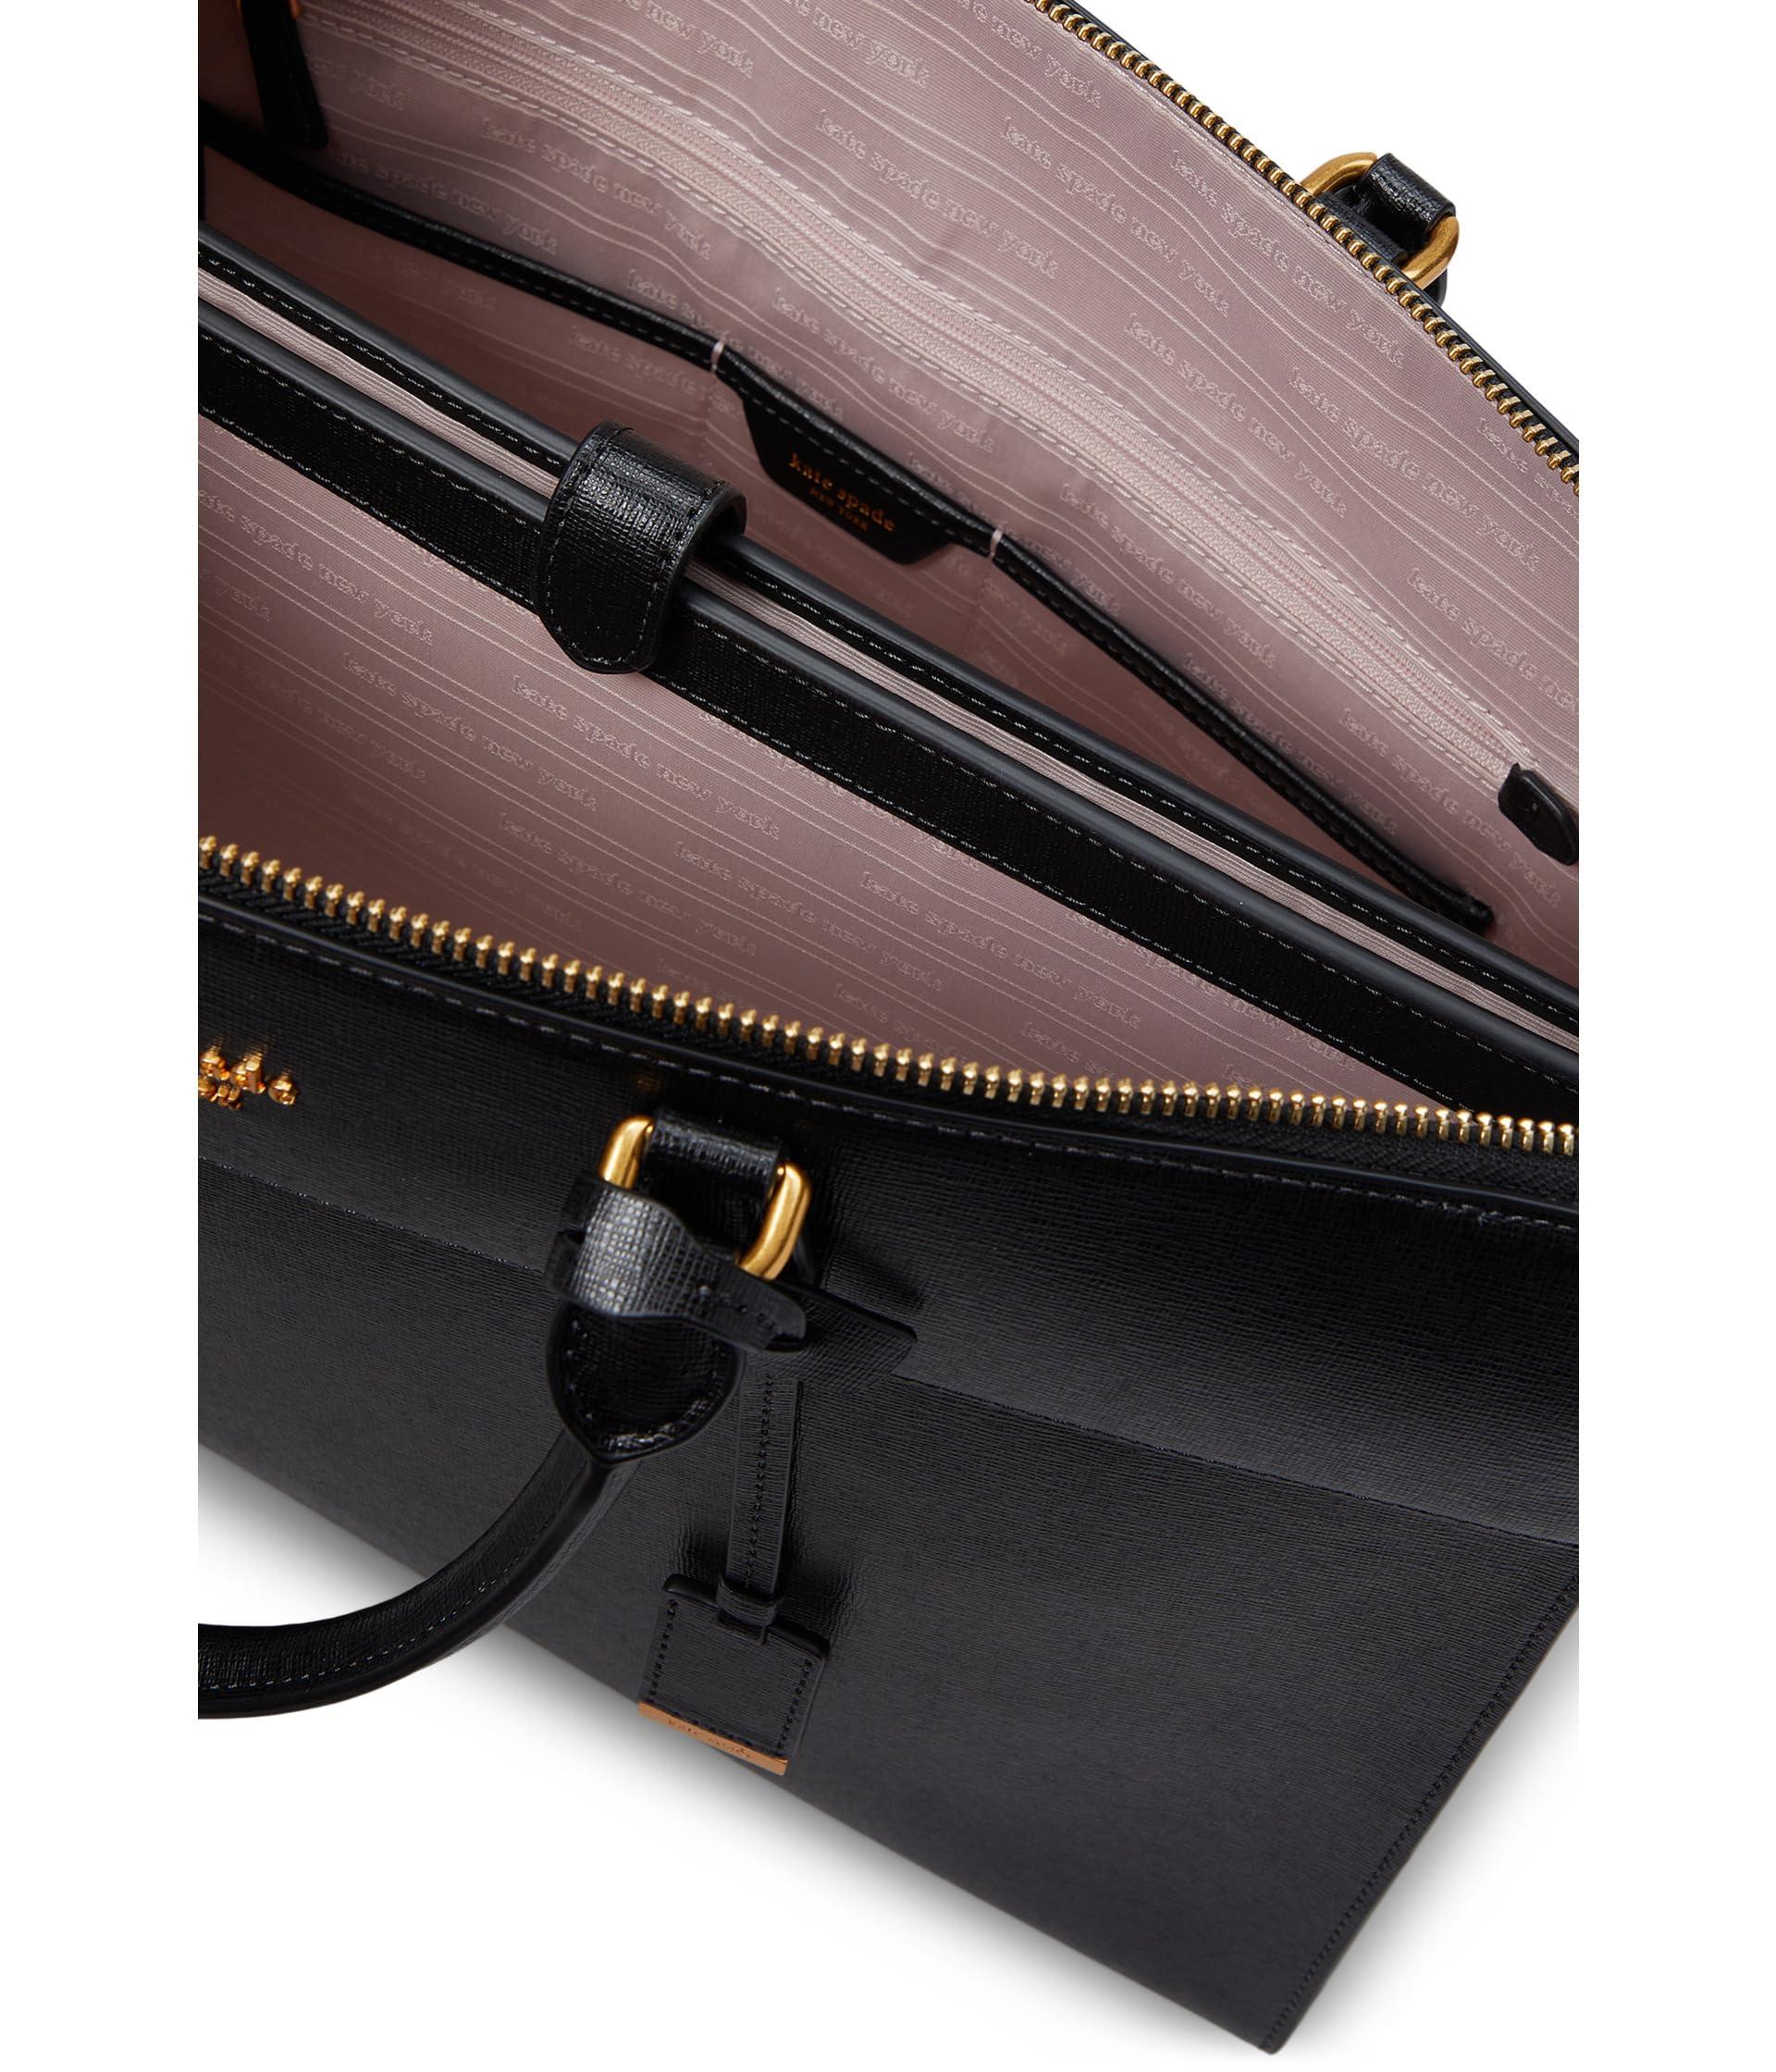 20 Best Leather Laptop Bags of 2022 | POPSUGAR Tech